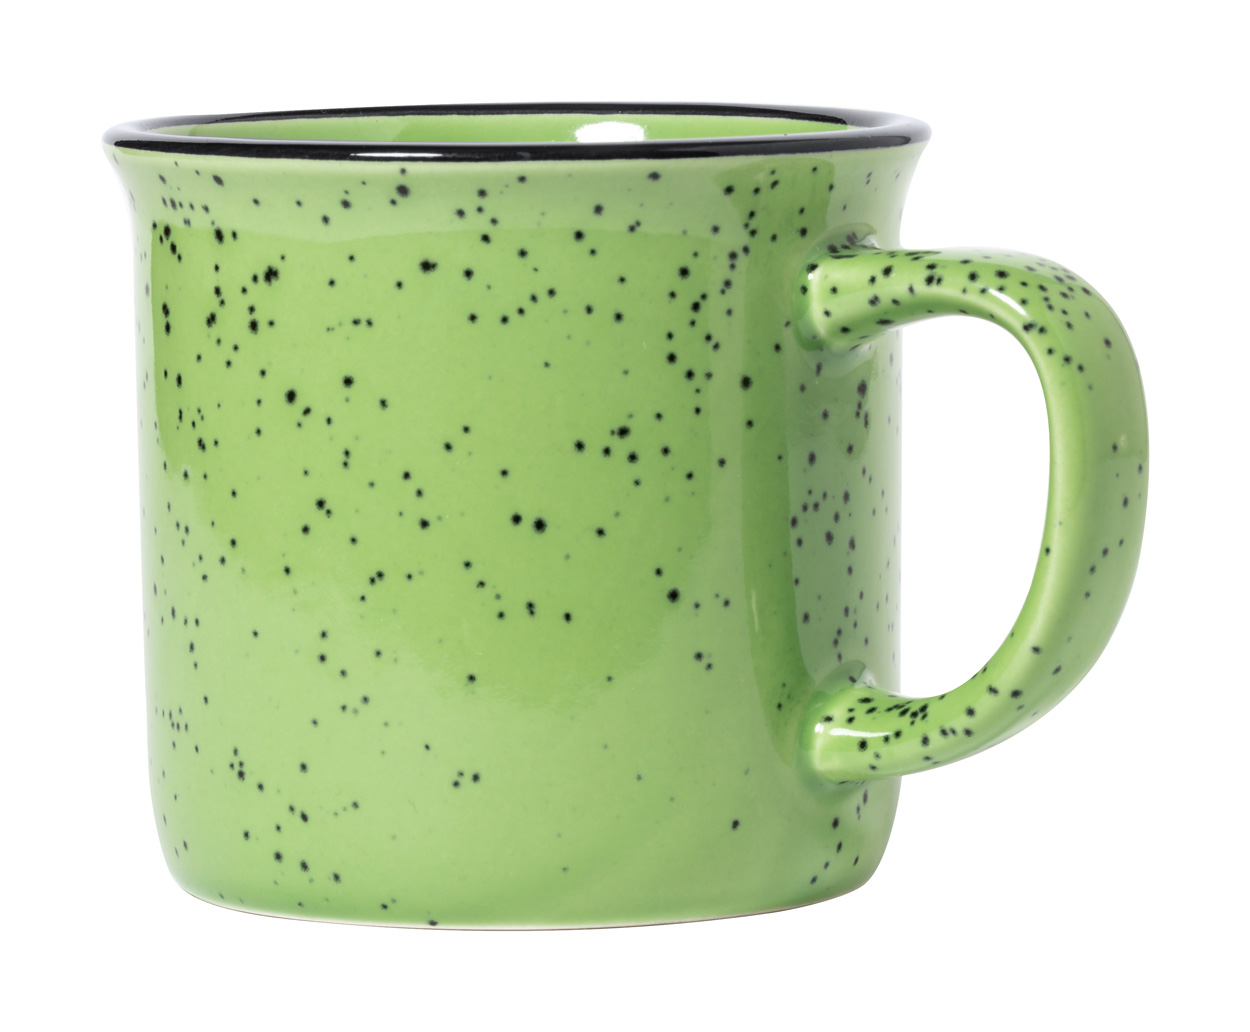 Lanay retro mug - green